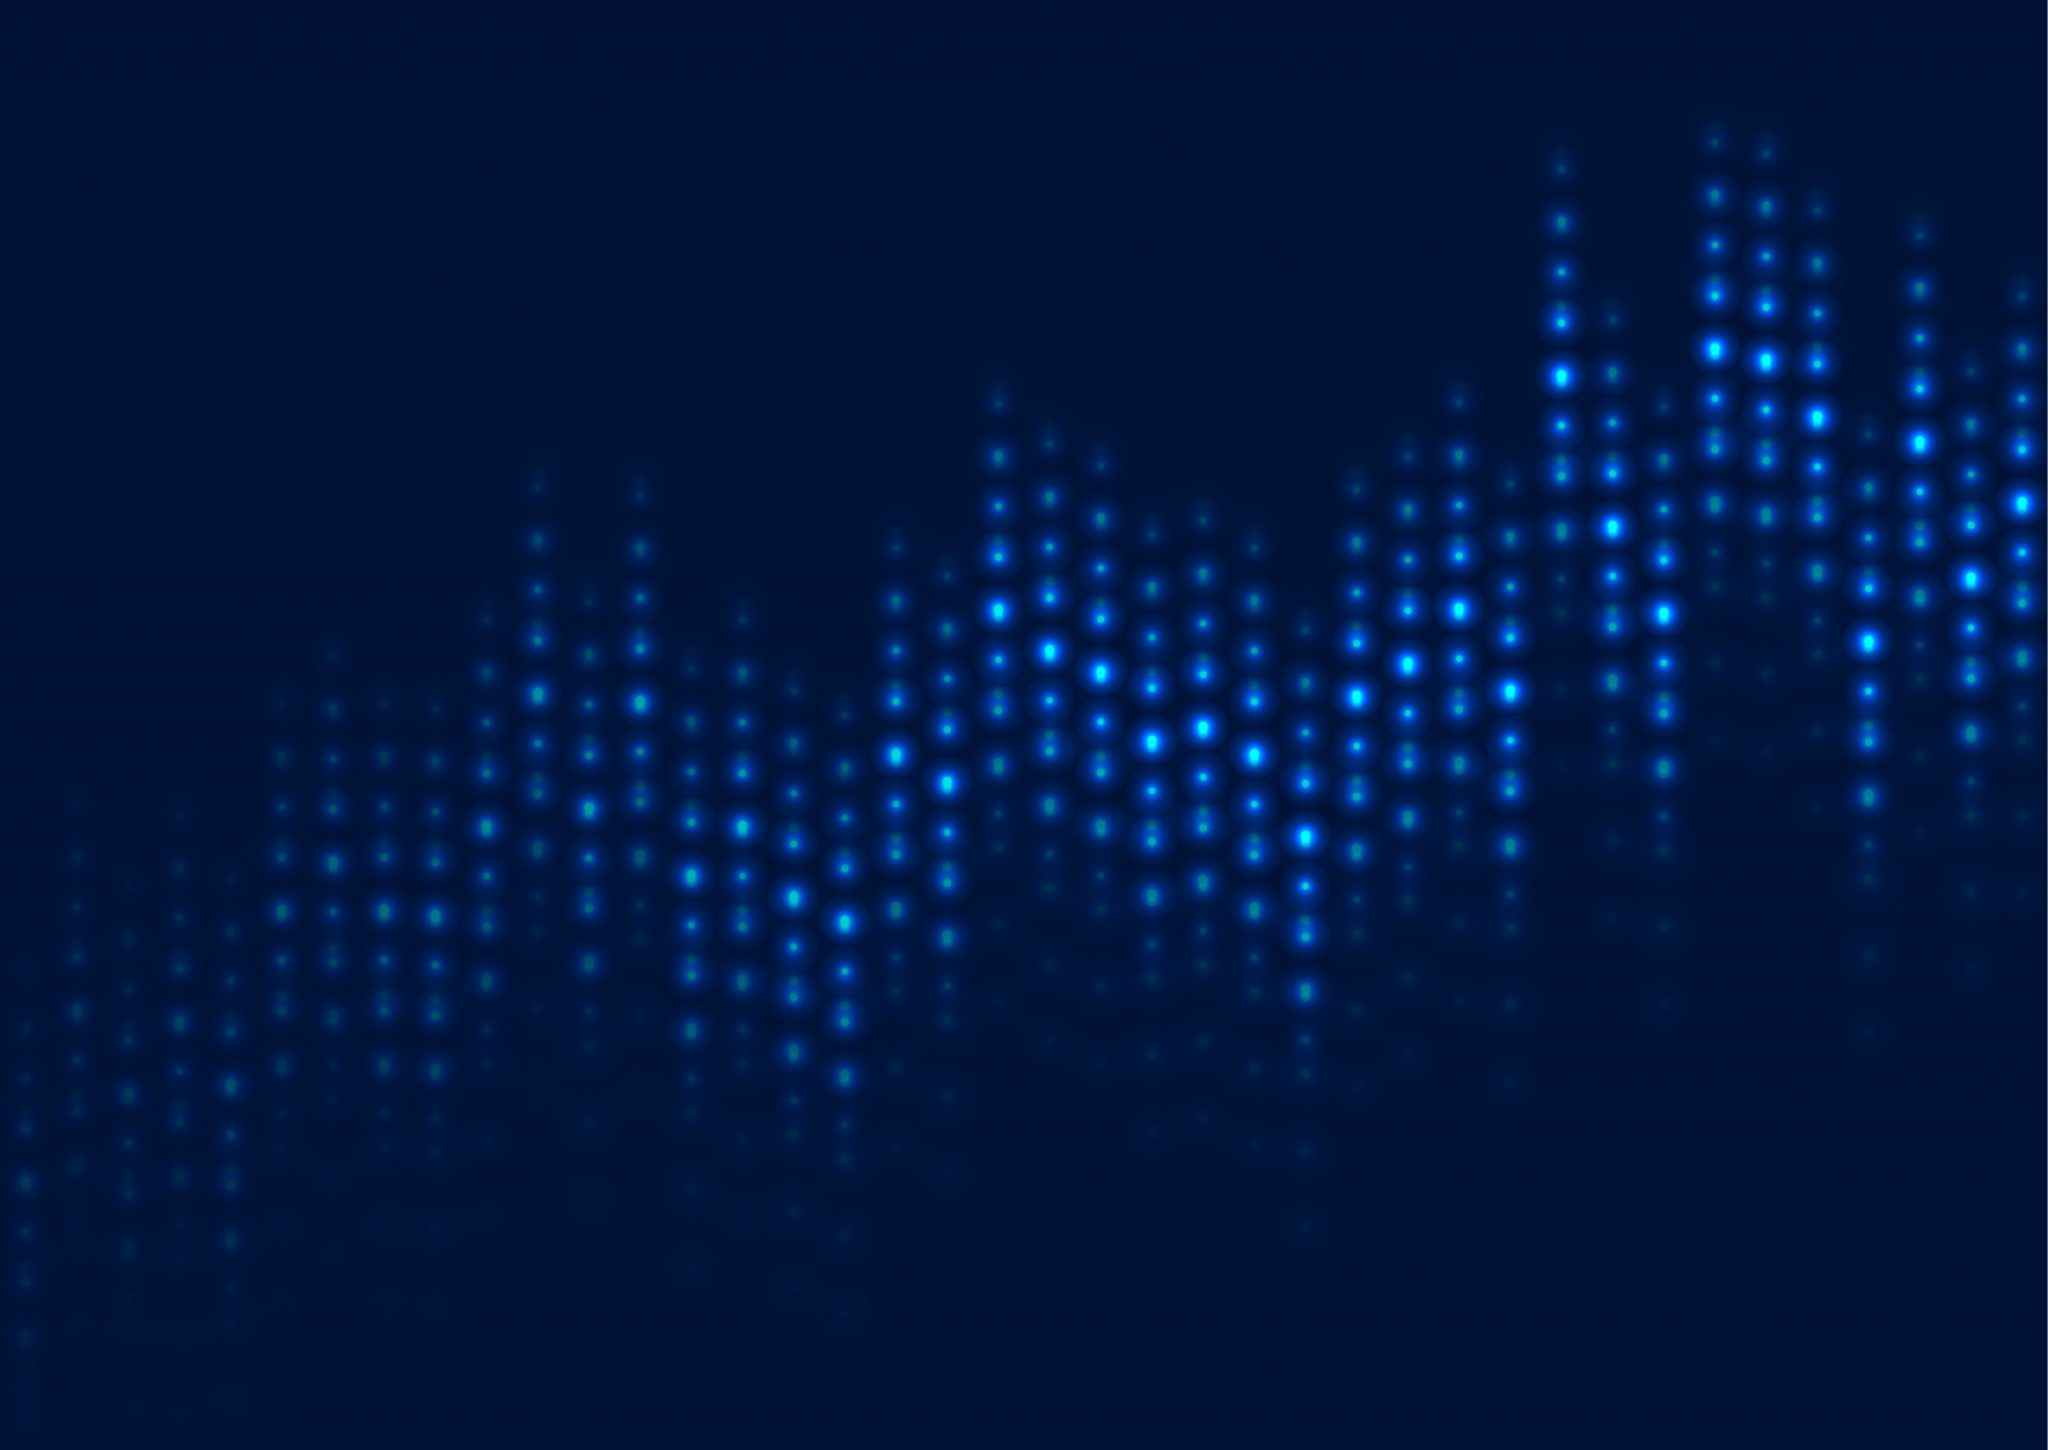 Pattern of light blue dots on a dark background